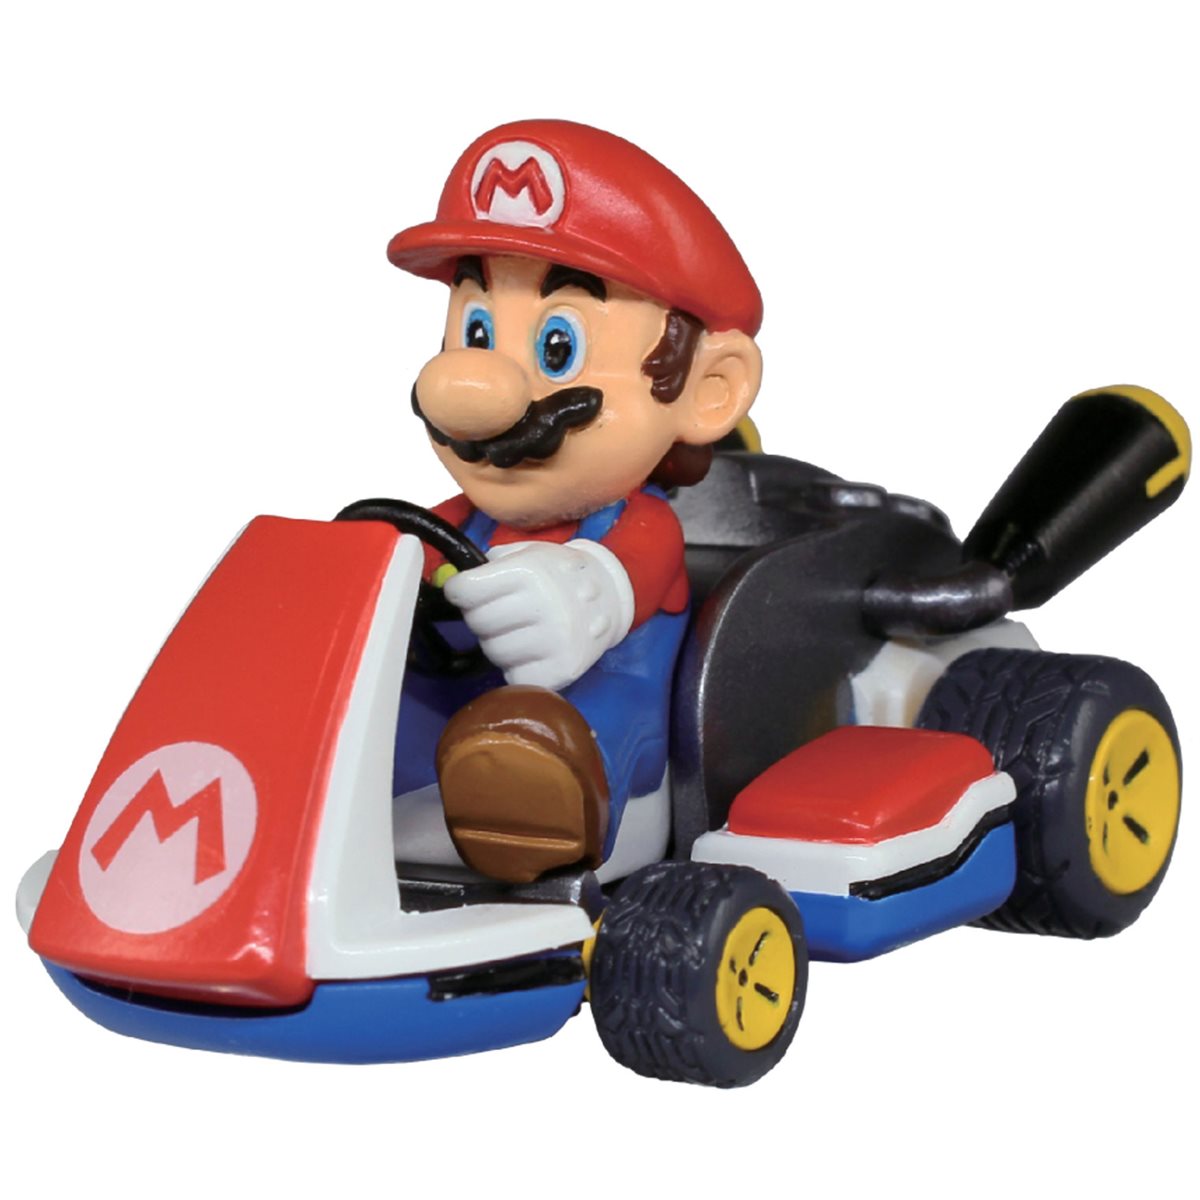 Buy Nintendo Super Mario Movie Figurine with Kart - Assorted